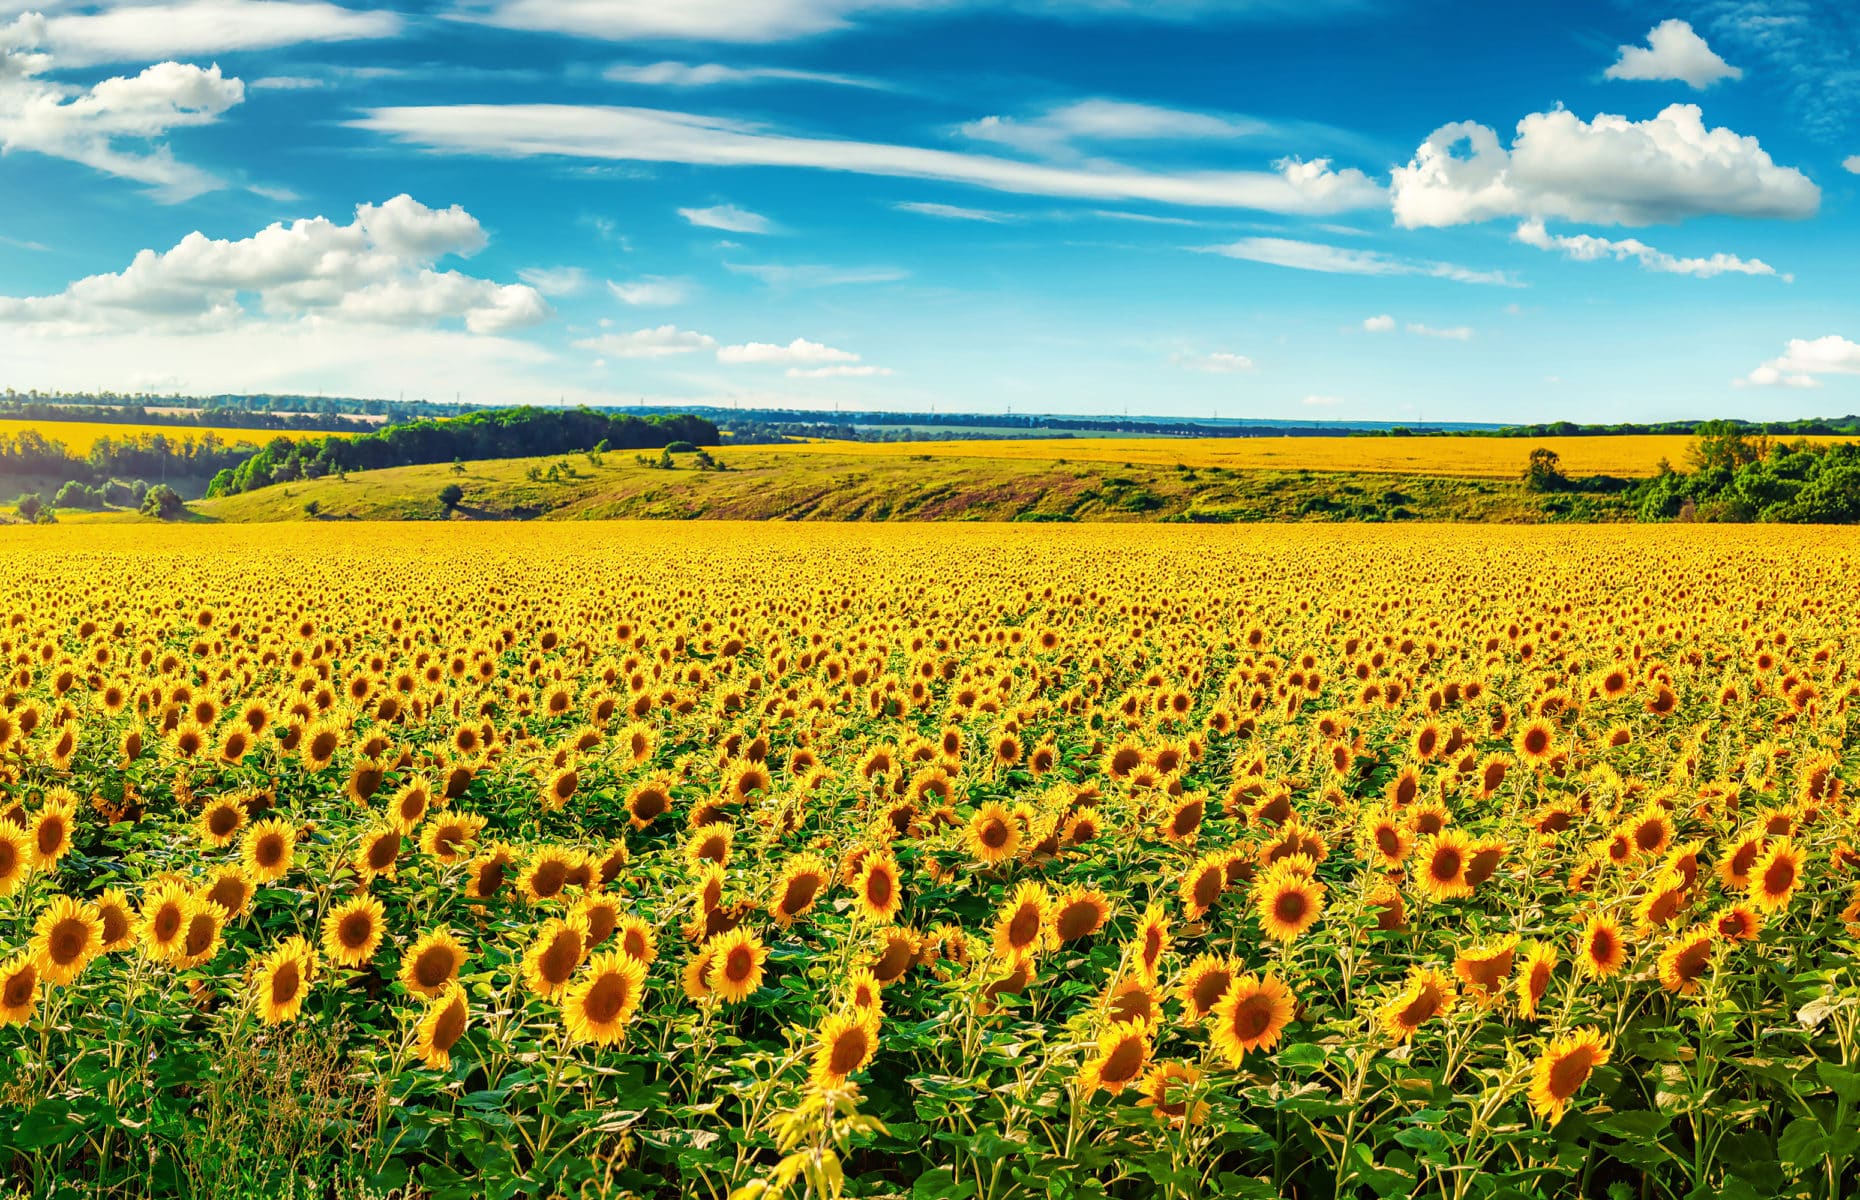 Blooming sunflower field